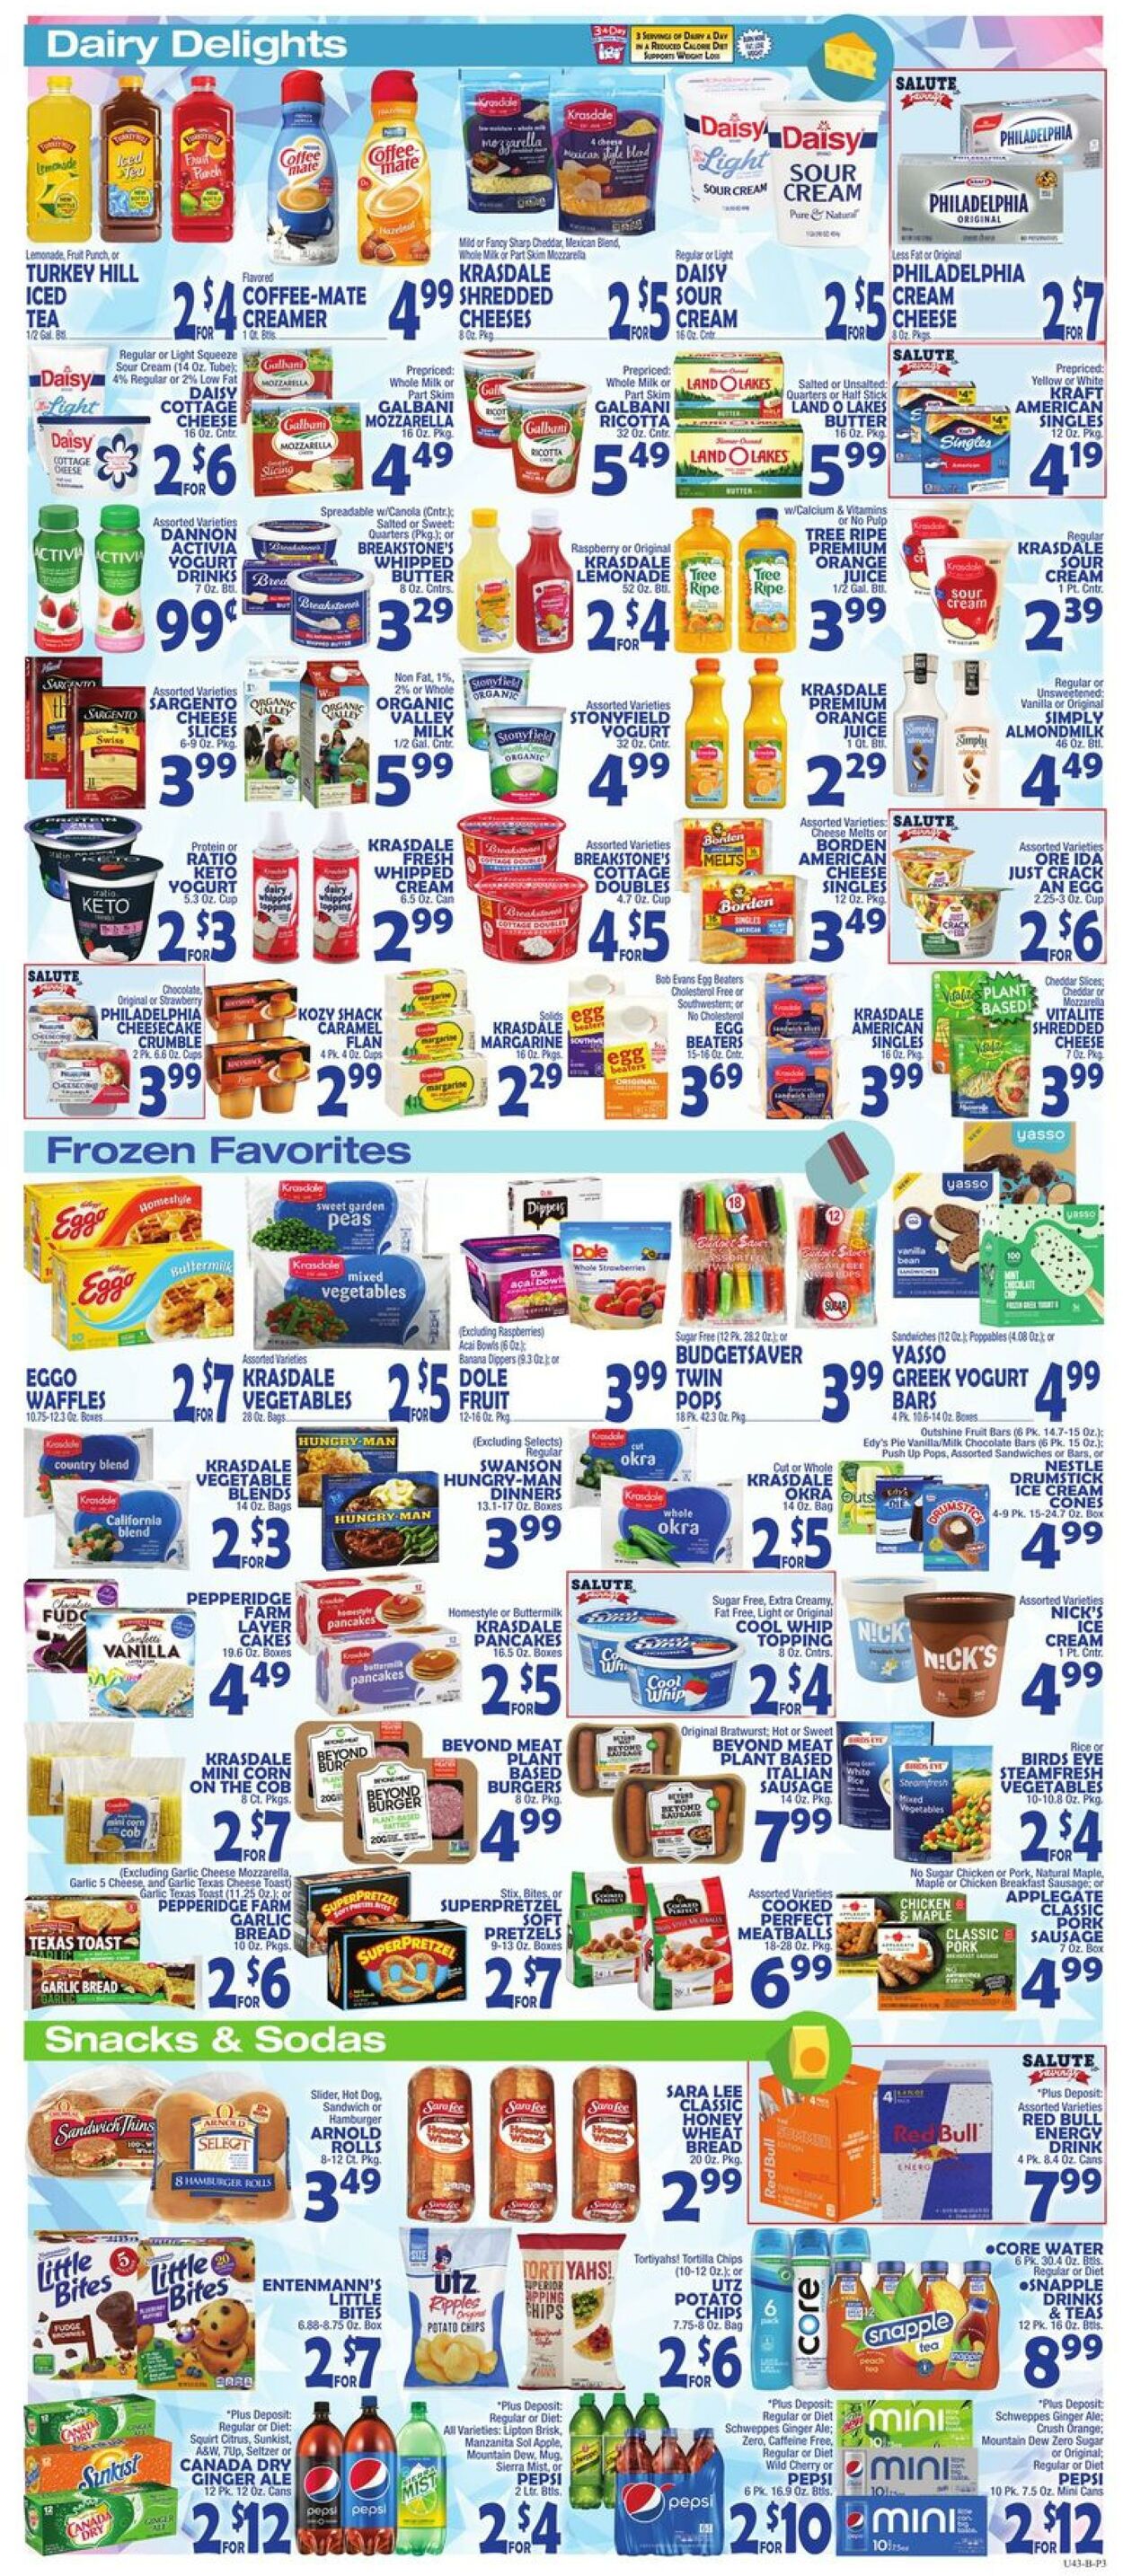 Weekly ad Bravo Supermarkets 05/27/2022 - 06/02/2022